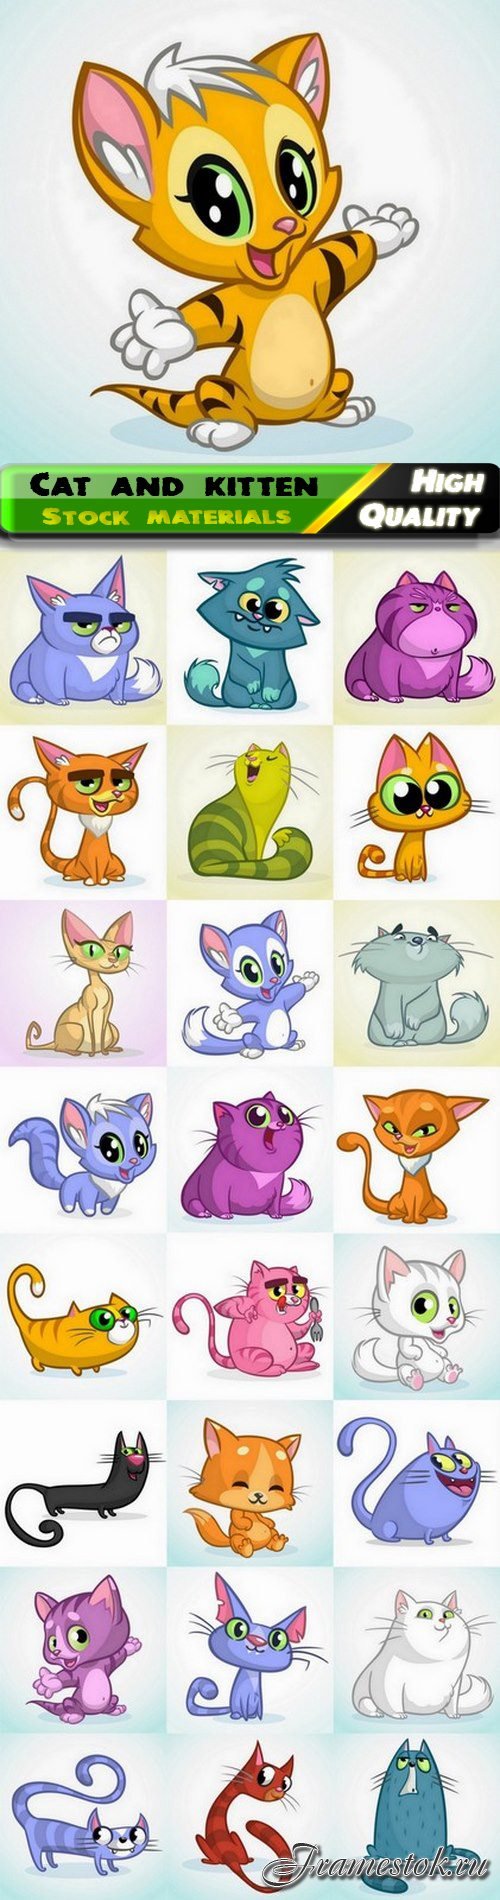 Cute illustration of cartoon cat and kitten of various breeds - 25 Eps